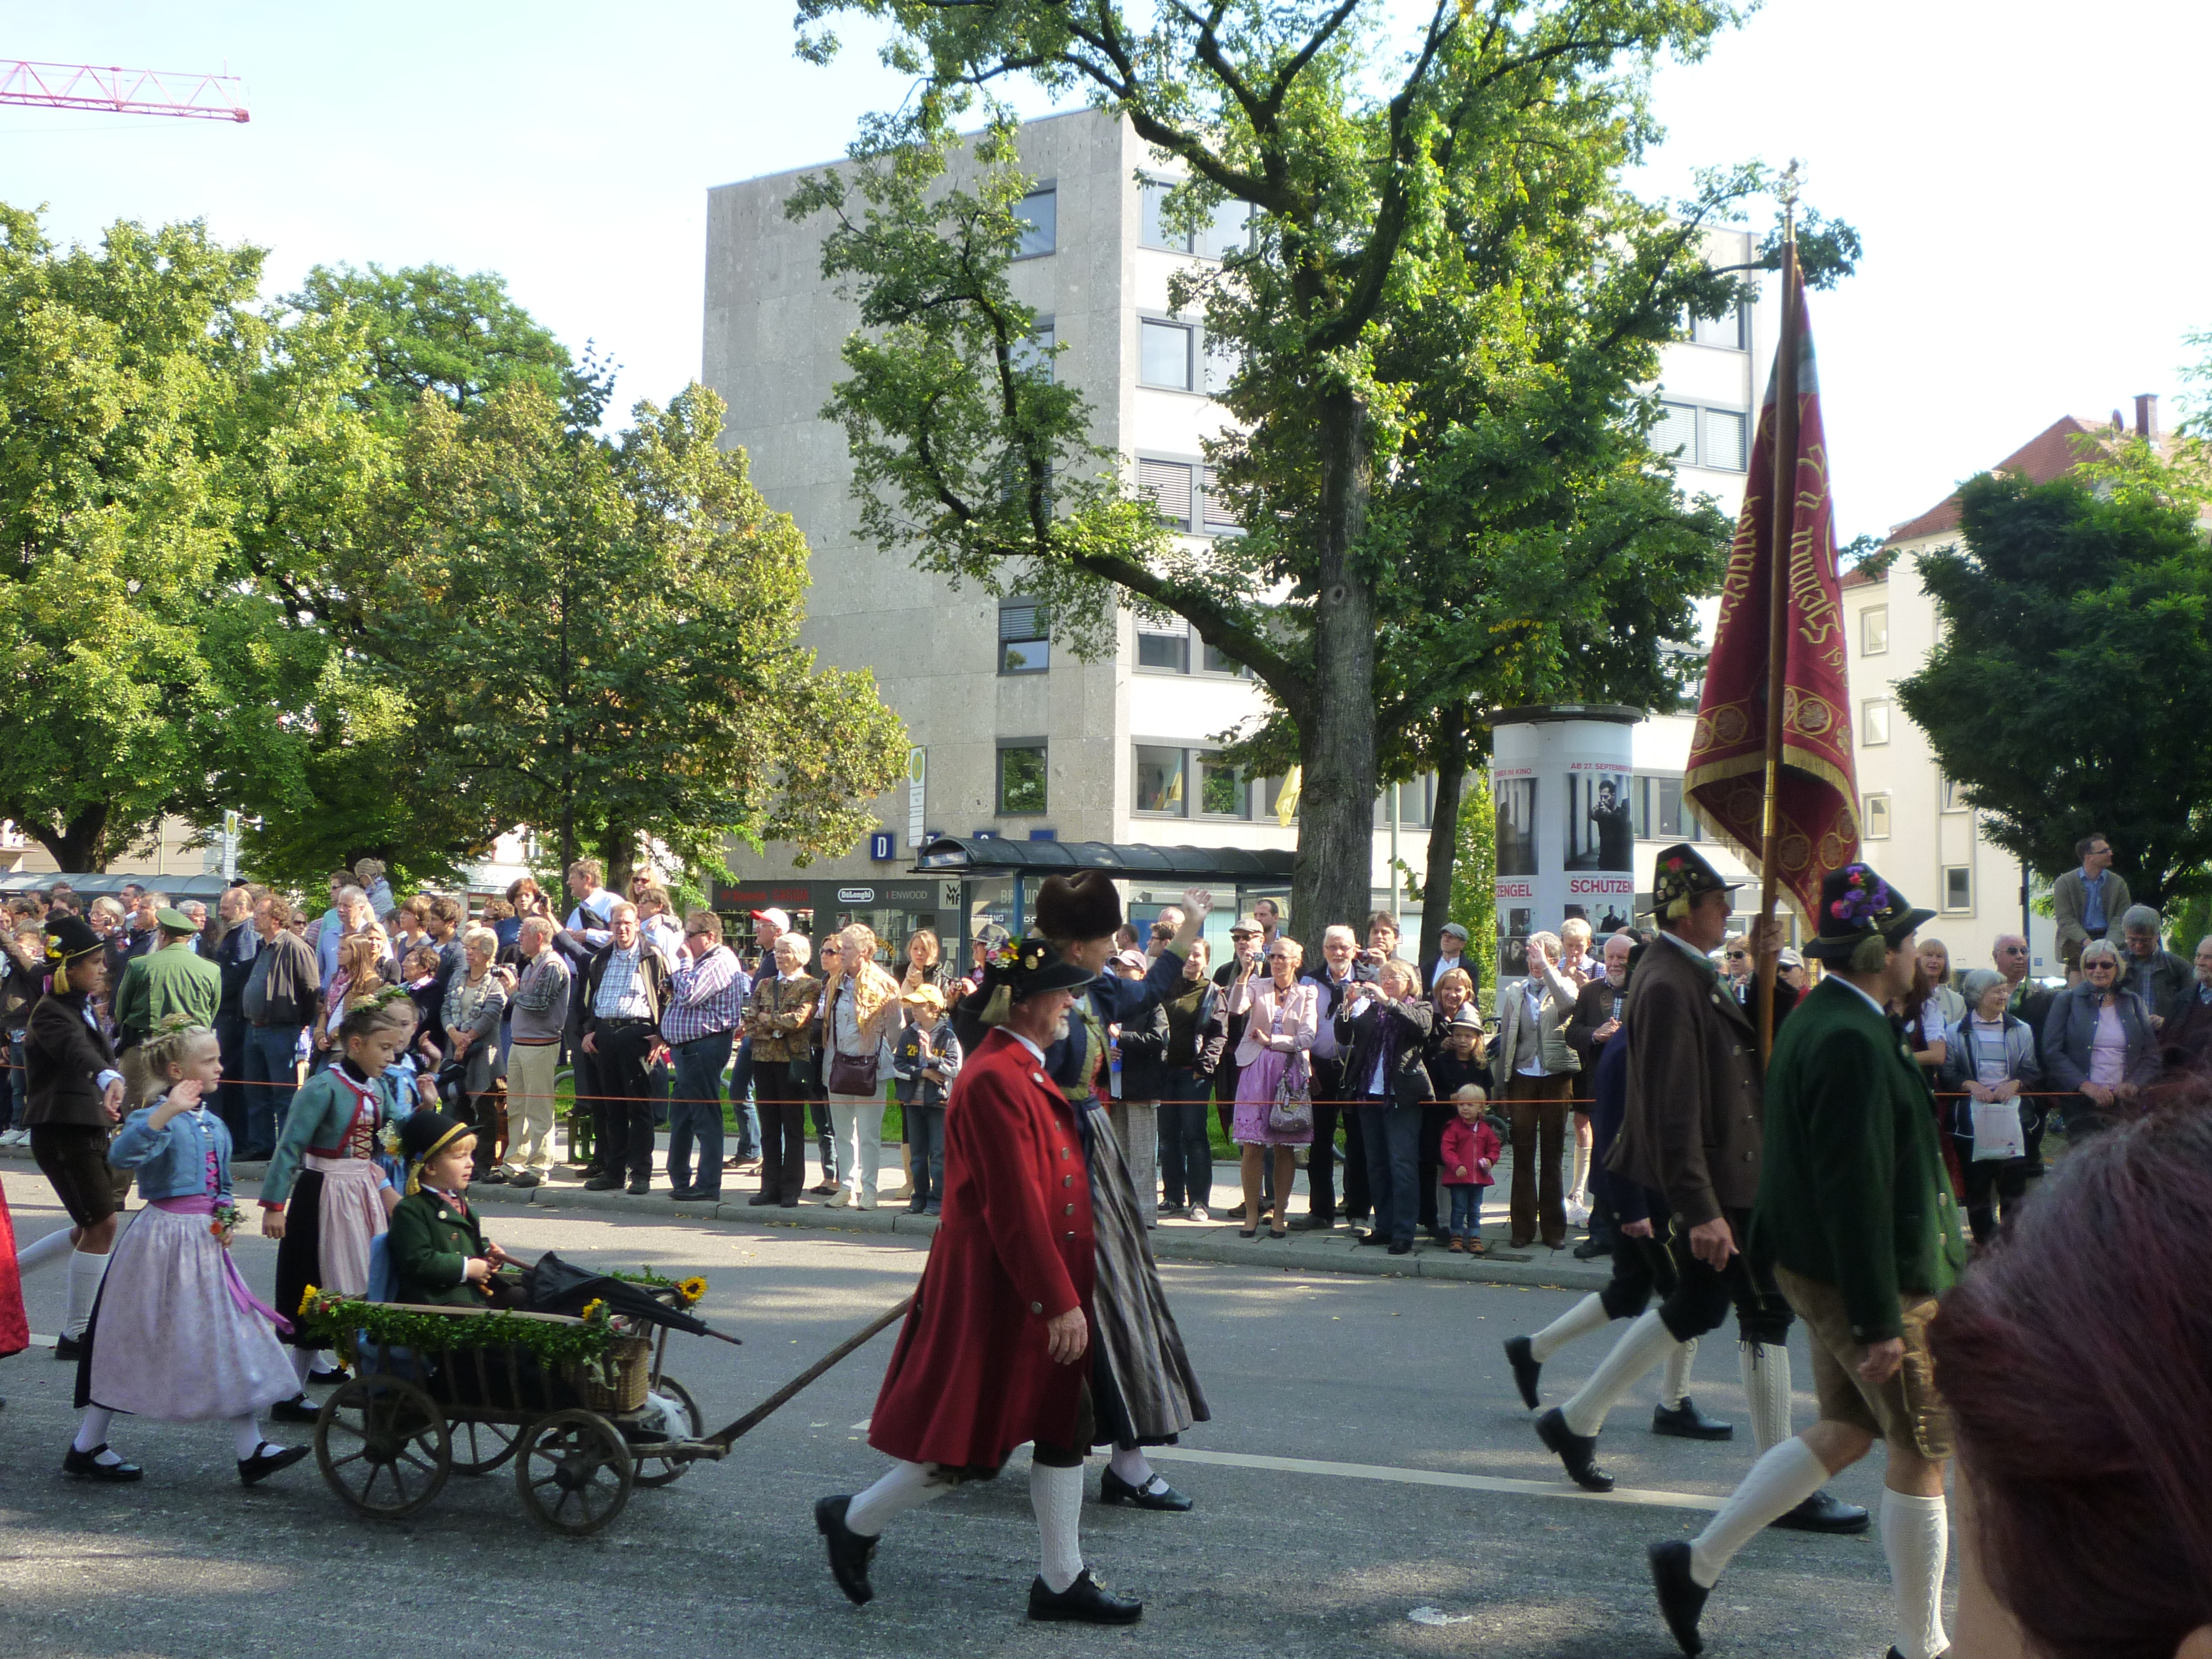 A Londoner from Afar Goes to Munich1 - Oktoberfest Parade